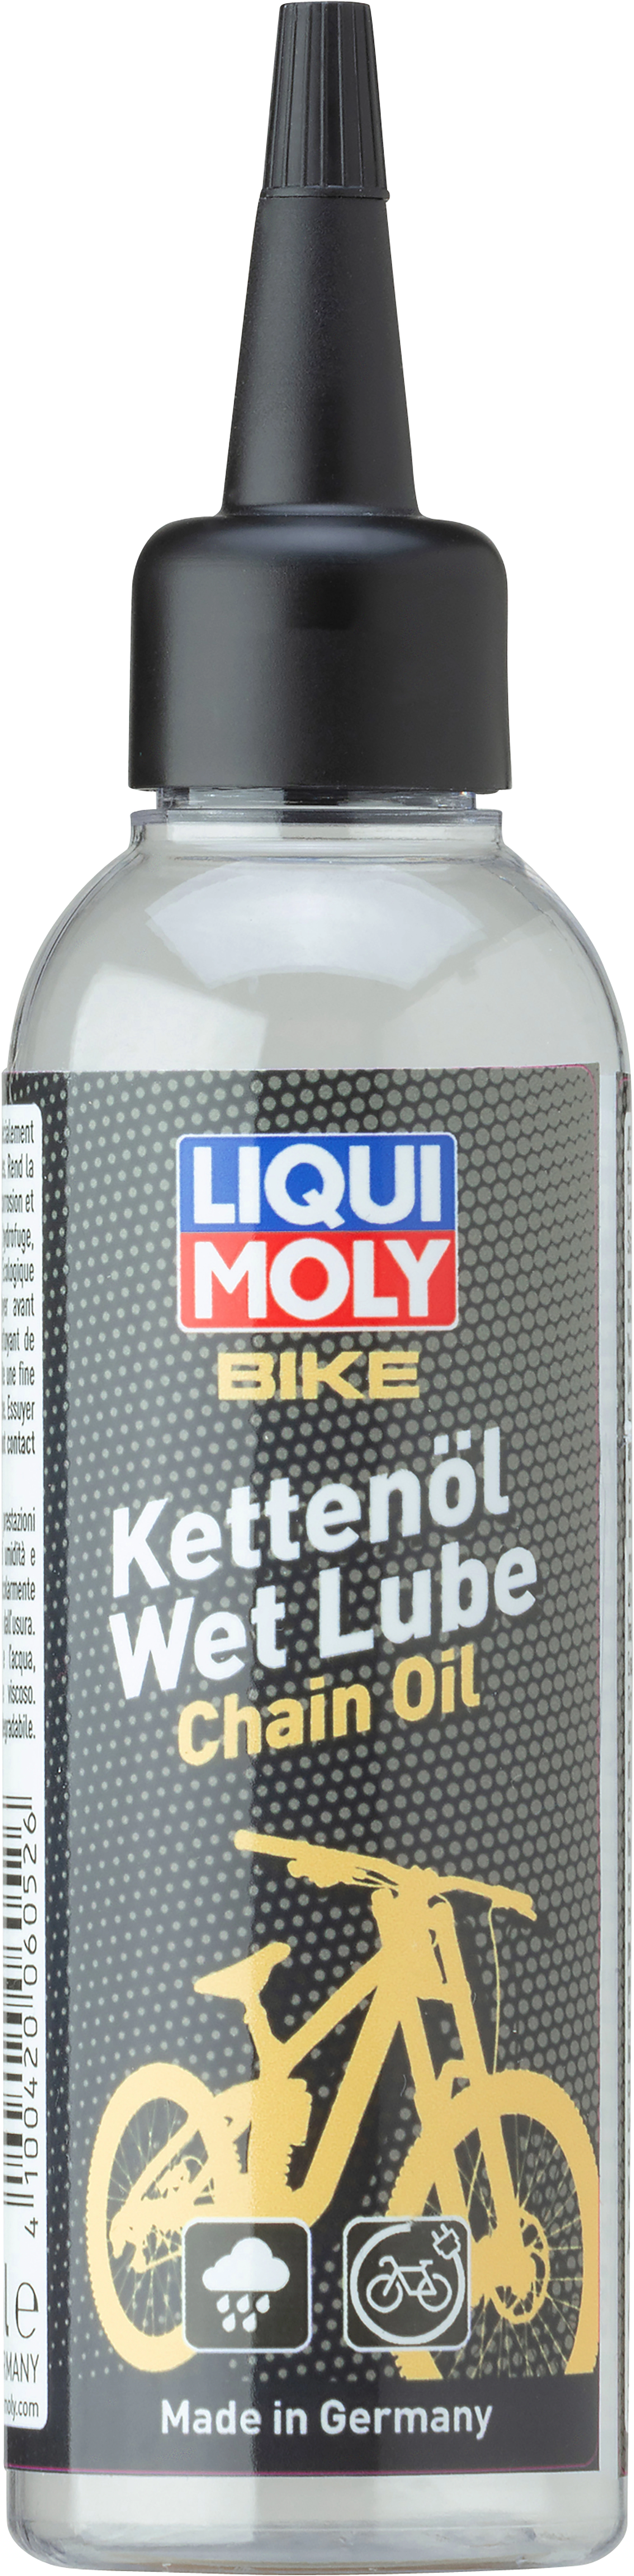 Liqui Moly Bike Kettenöl Wet Lube 100 ml kaufen bei OBI